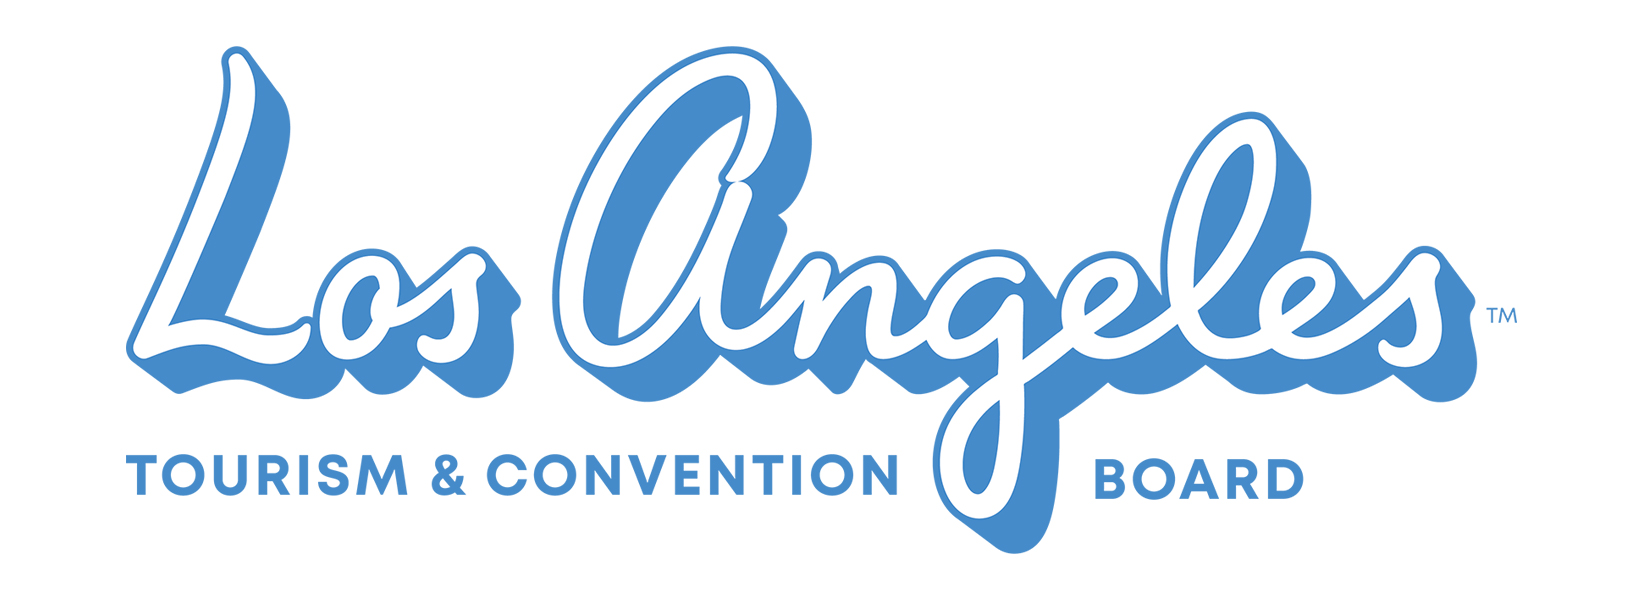 Los Angeles Tourism & Convention logo